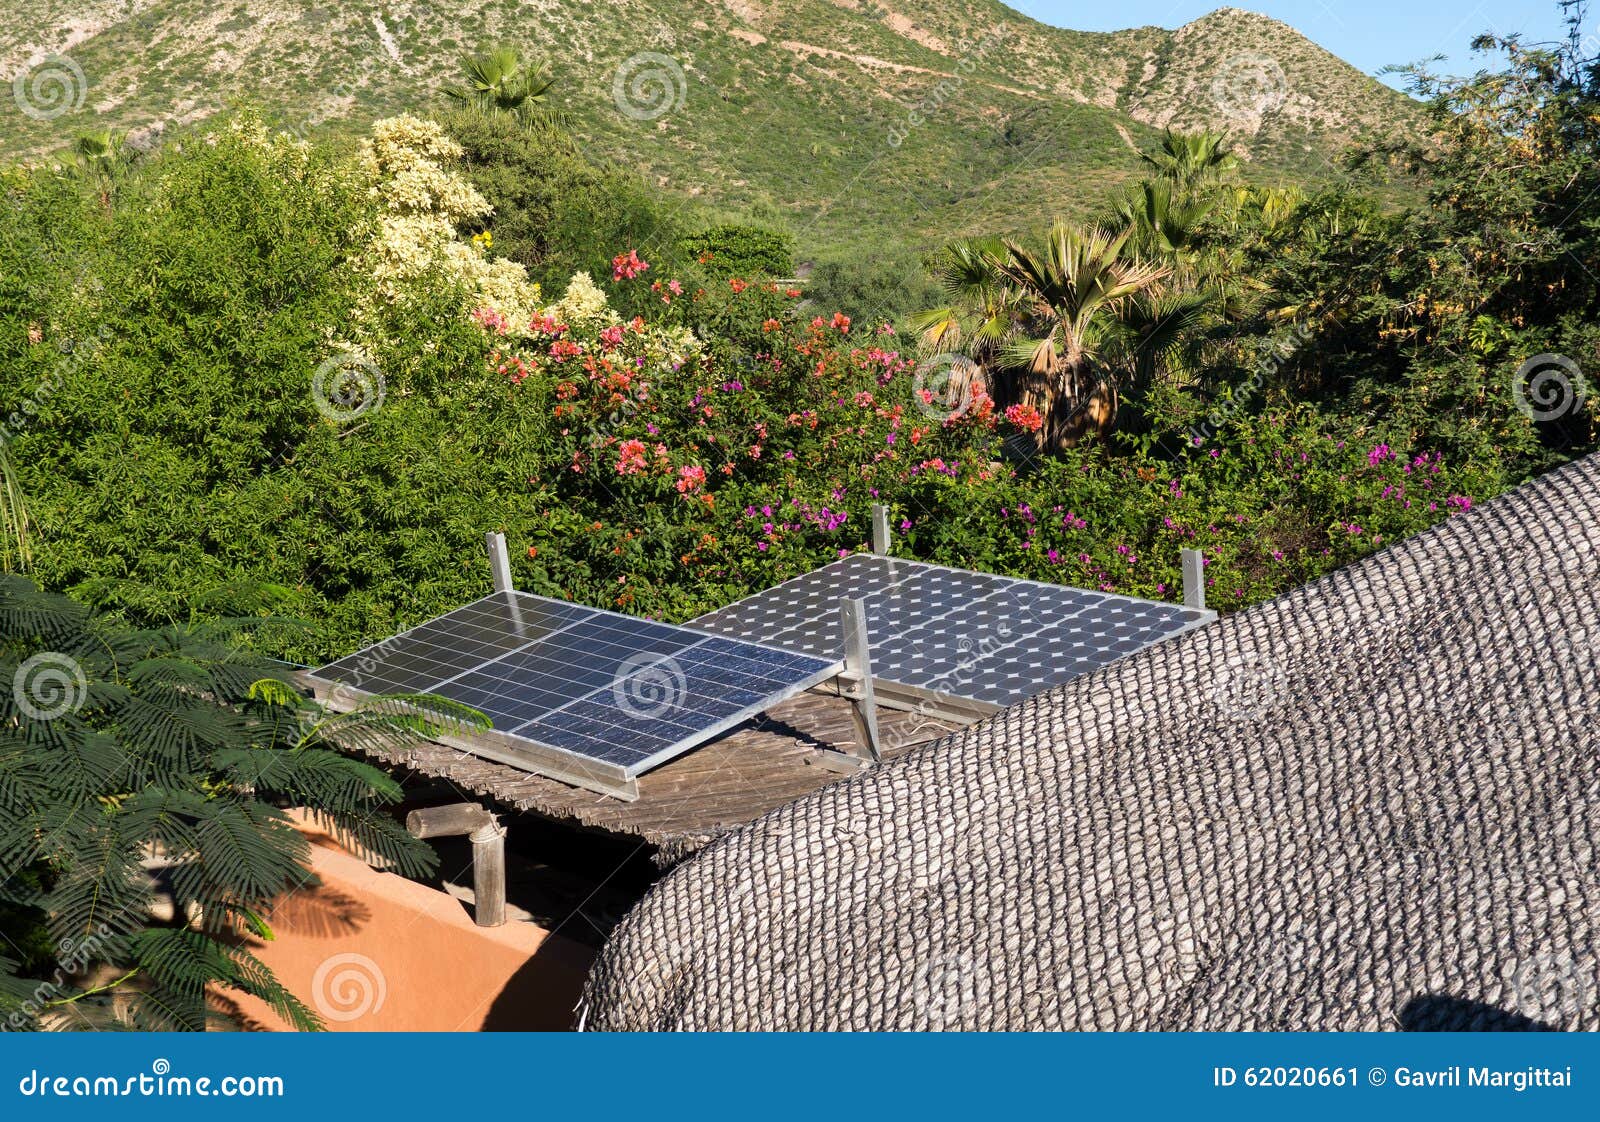 solar panels in cabo pulmo, an echo village